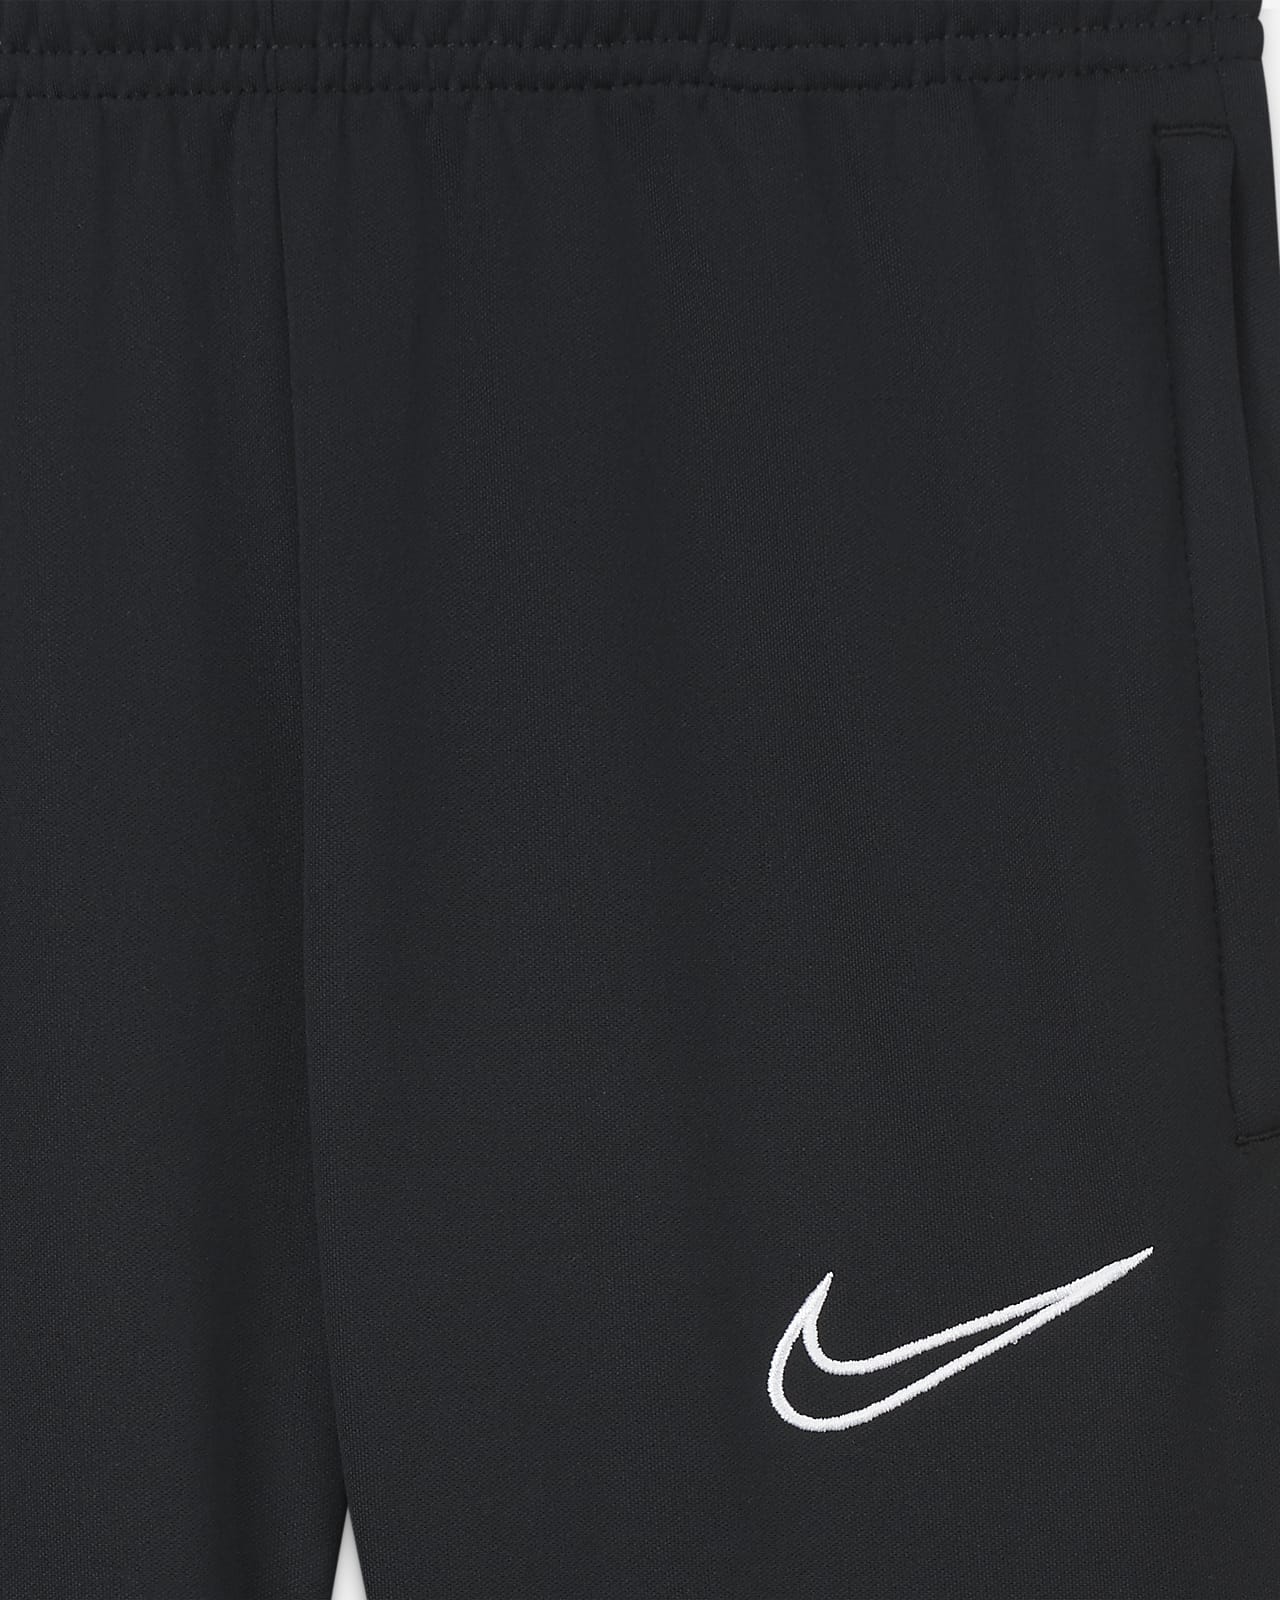 Nike Dry Academy Pant JUNIOR pants black 839365 016 839365 016  Sports  accessories  Official archives of Merkandi  Merkandi B2B